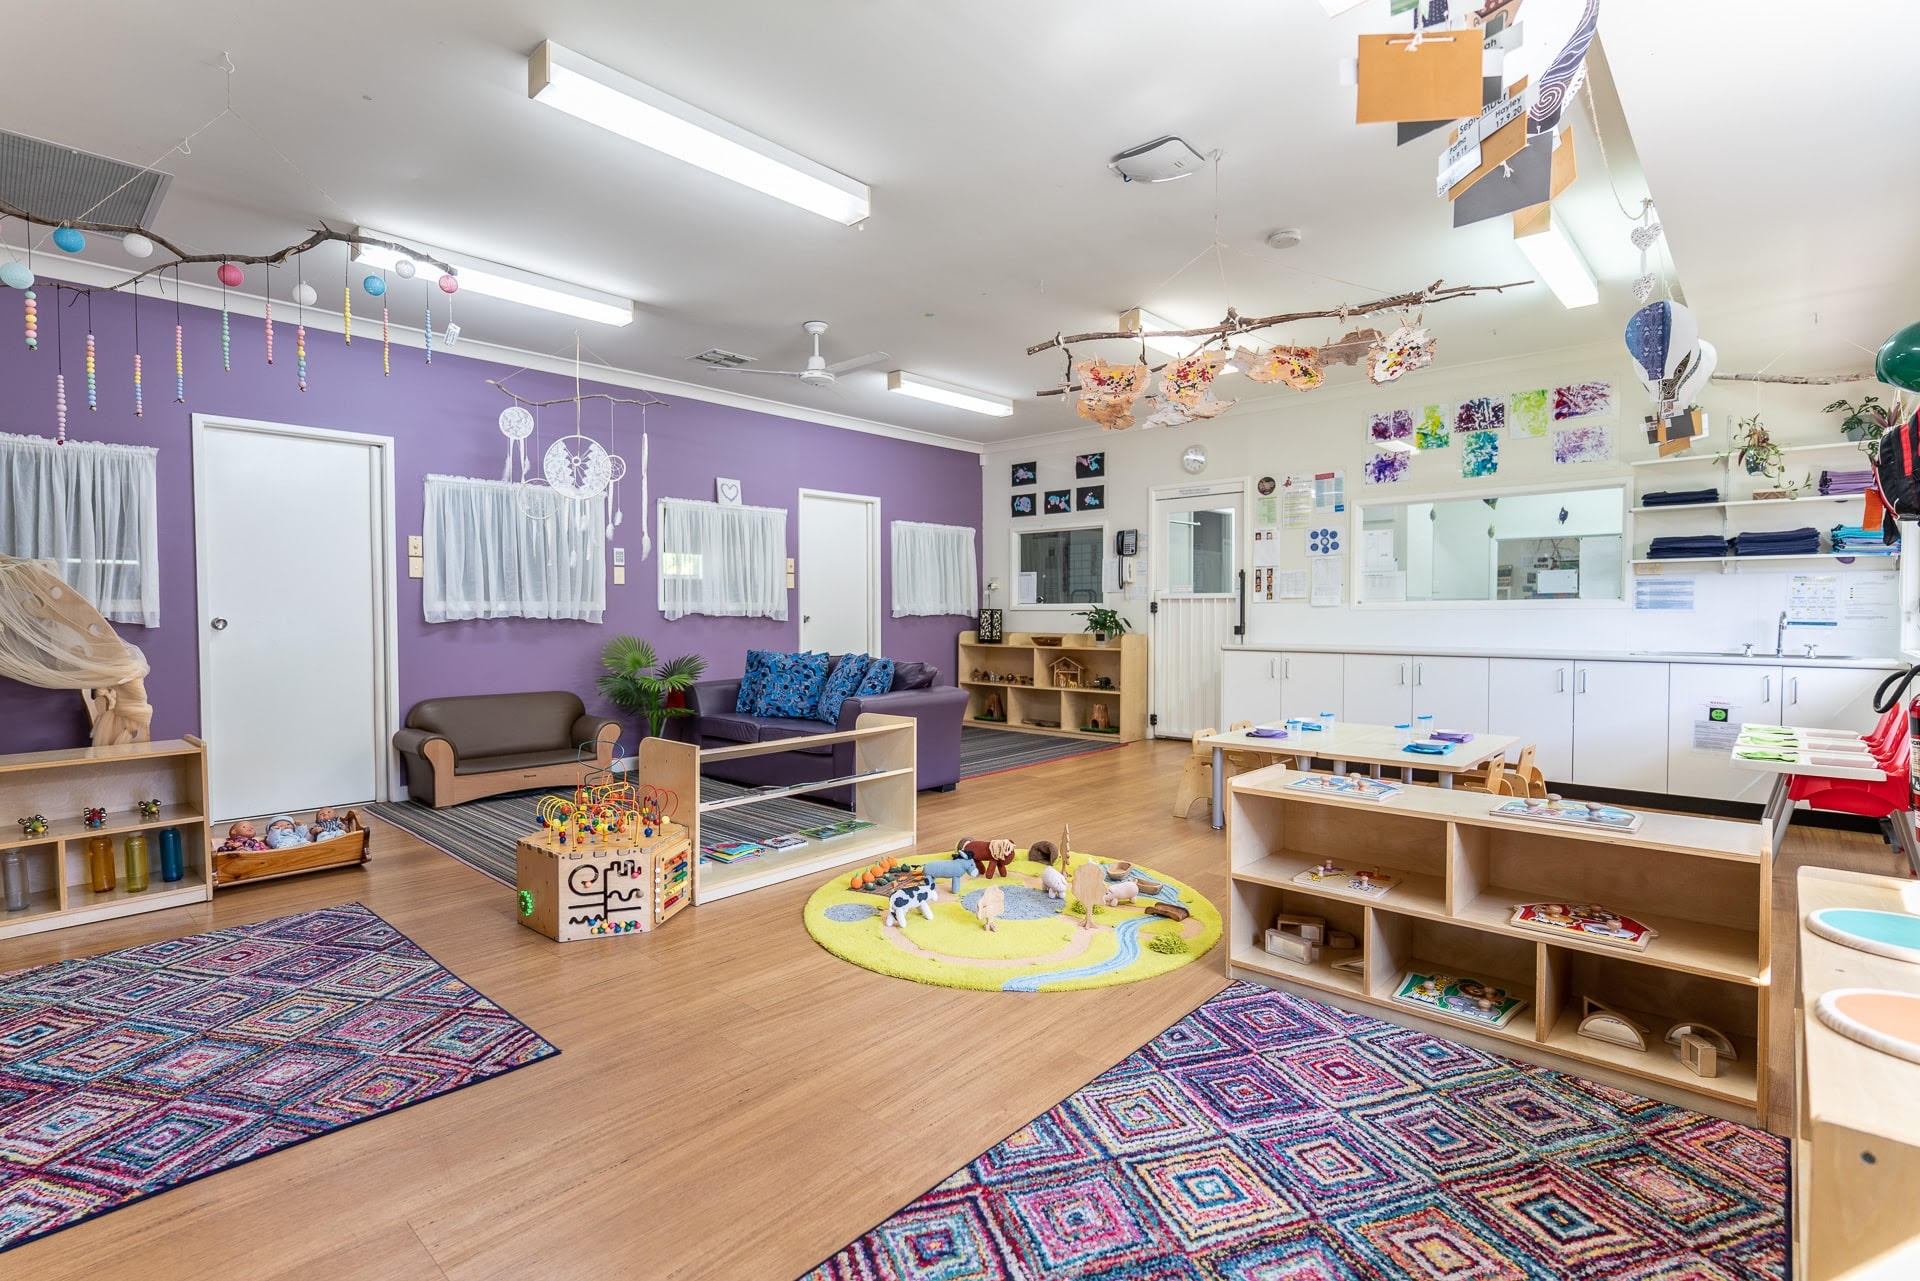 Explore & Develop Waitara childcare and preschool